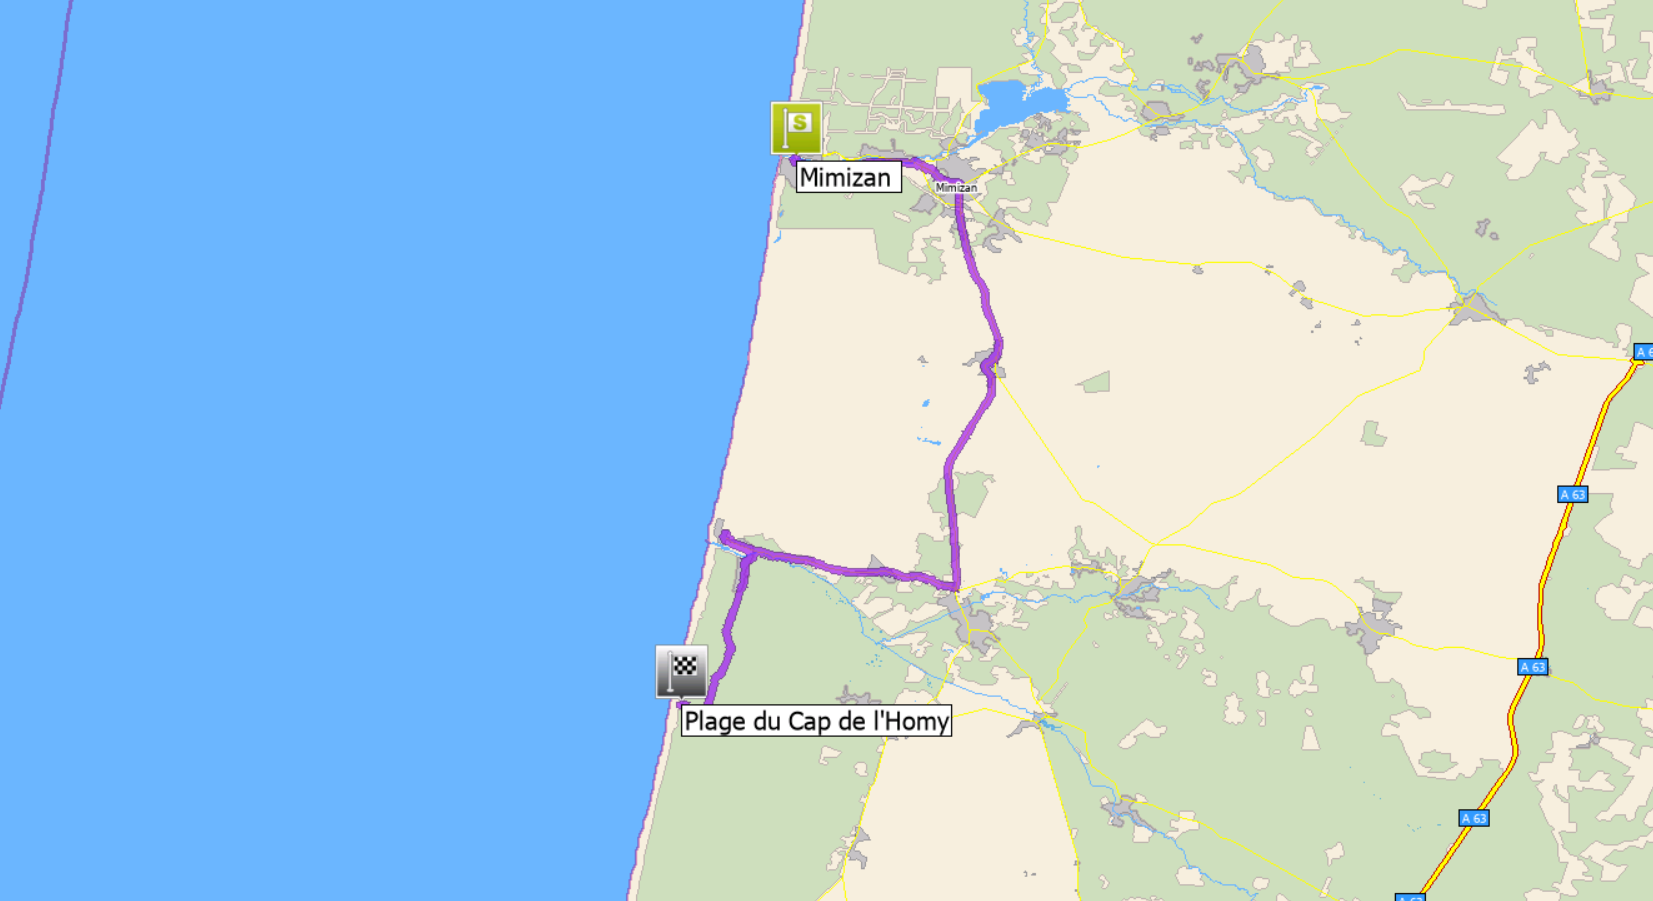 Plage-du-mimizan-plage-du-cap-de-lhomy-25-10-2020-ujeto-40-km